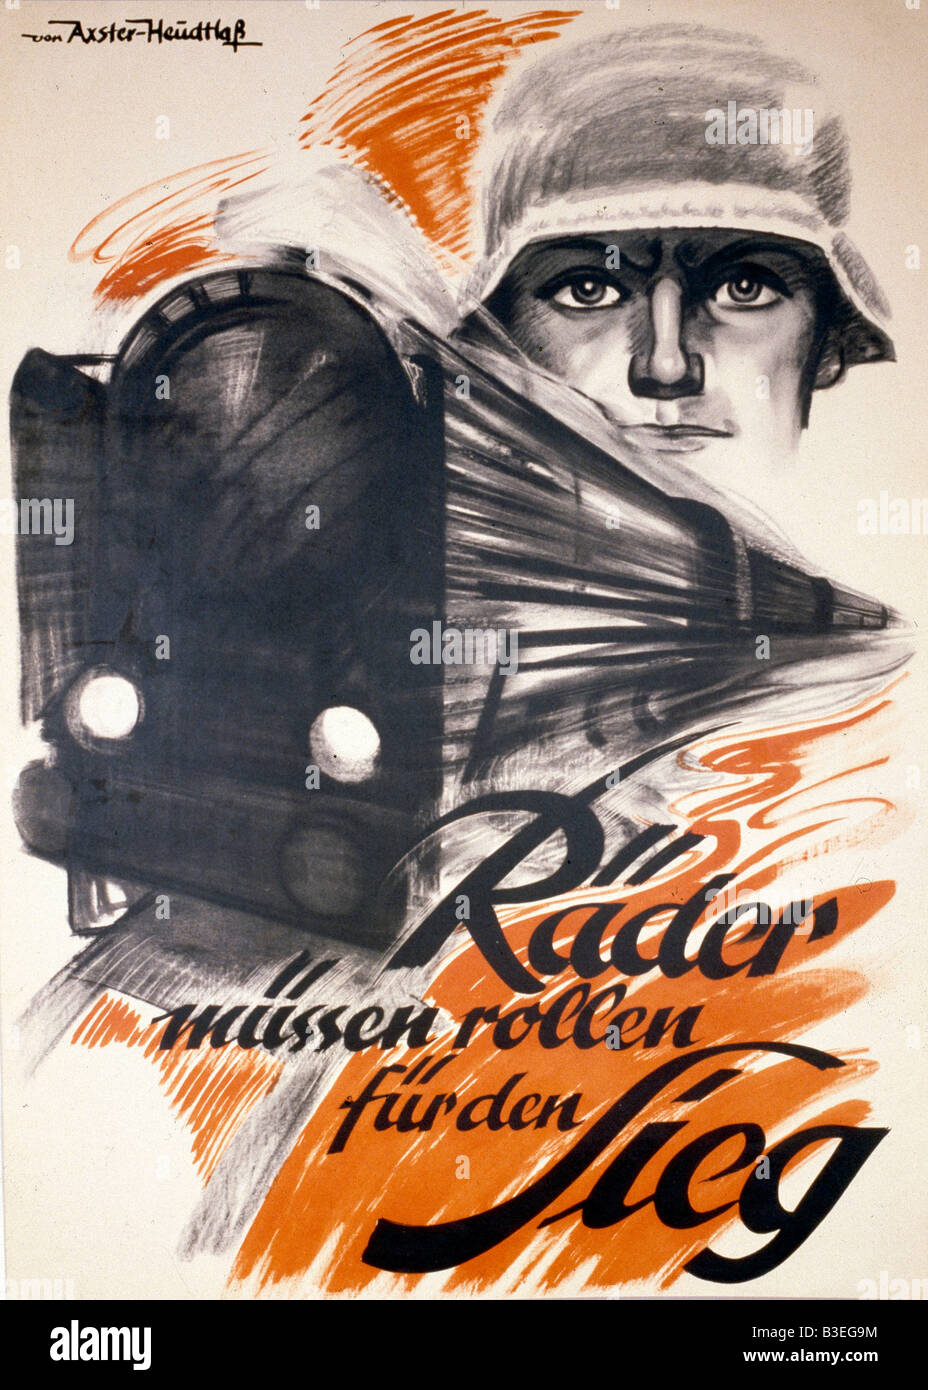 NS-Propaganda Poster/Second World War. Stock Photo